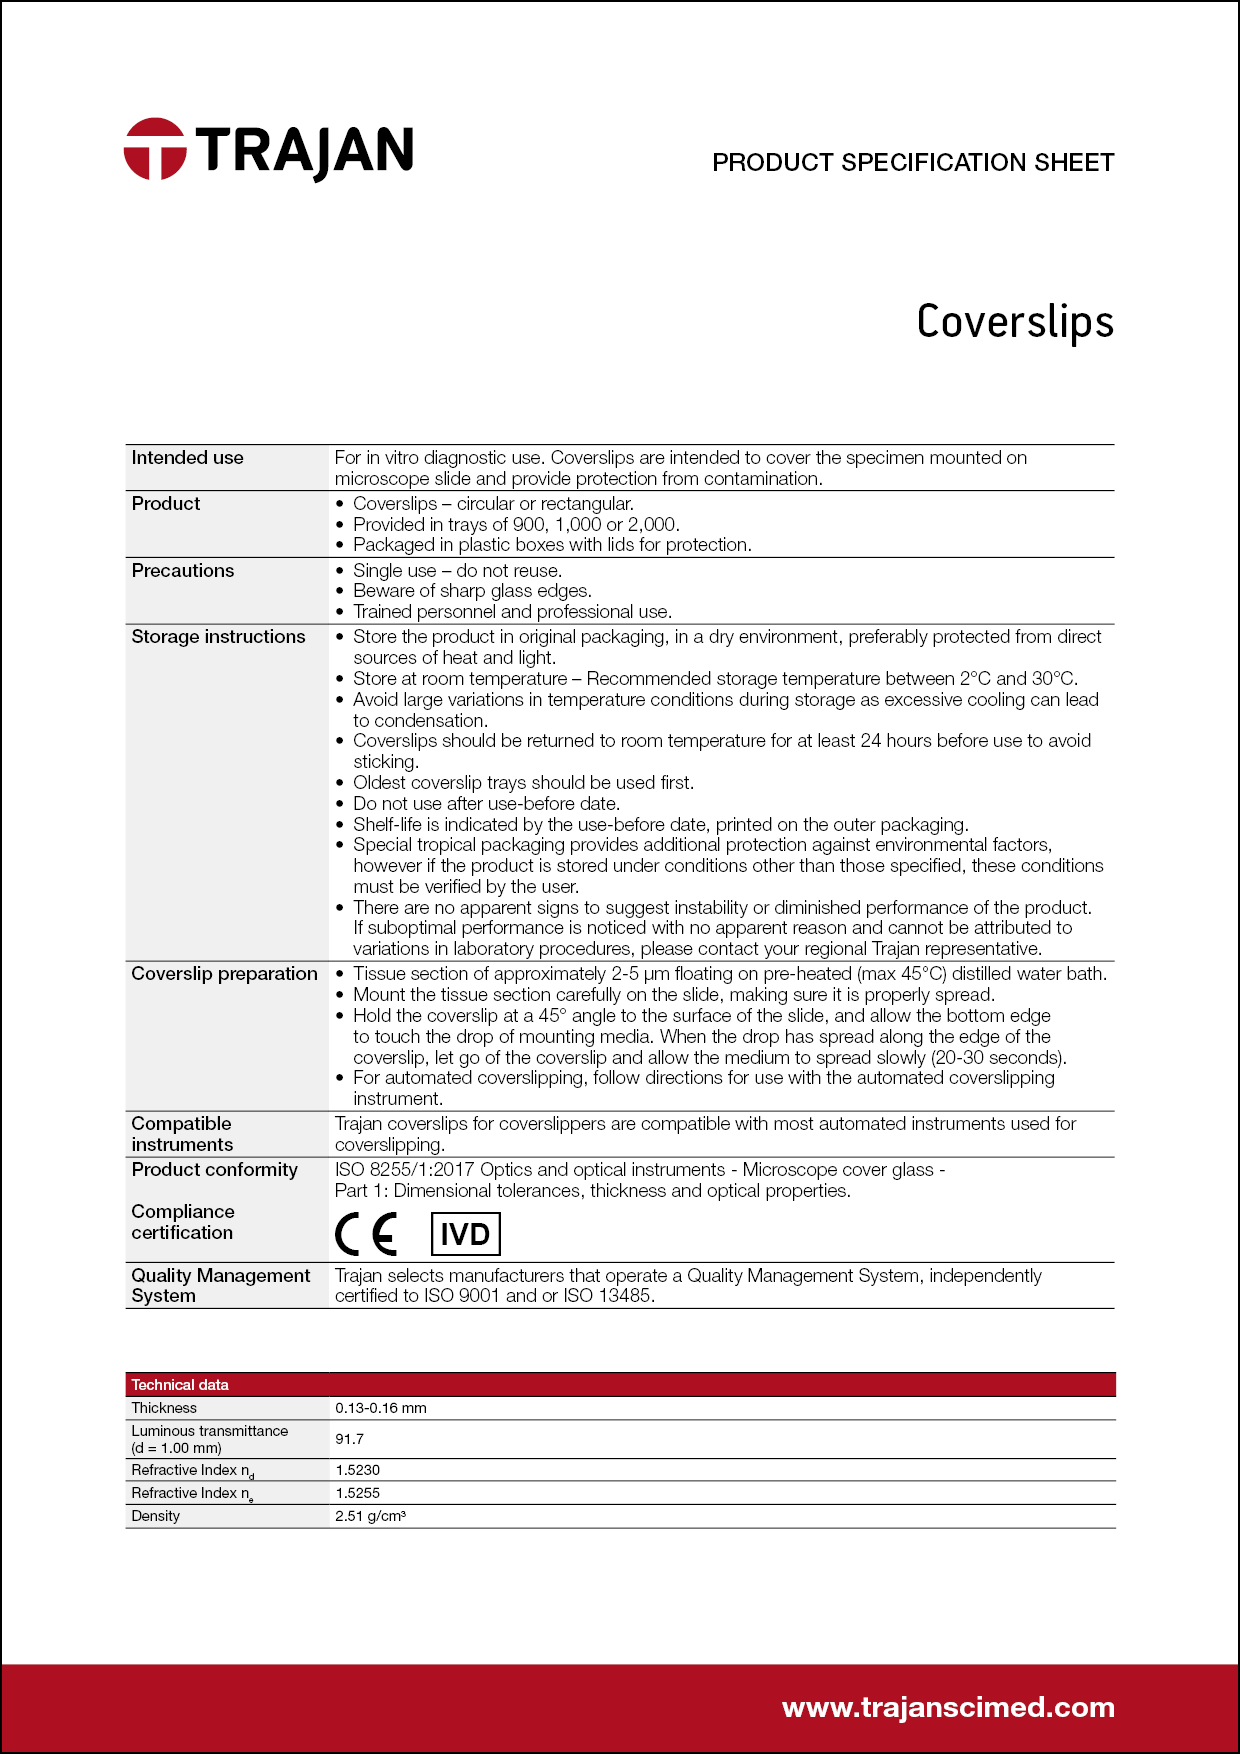 Product Specification Sheet - Trajan coverslips